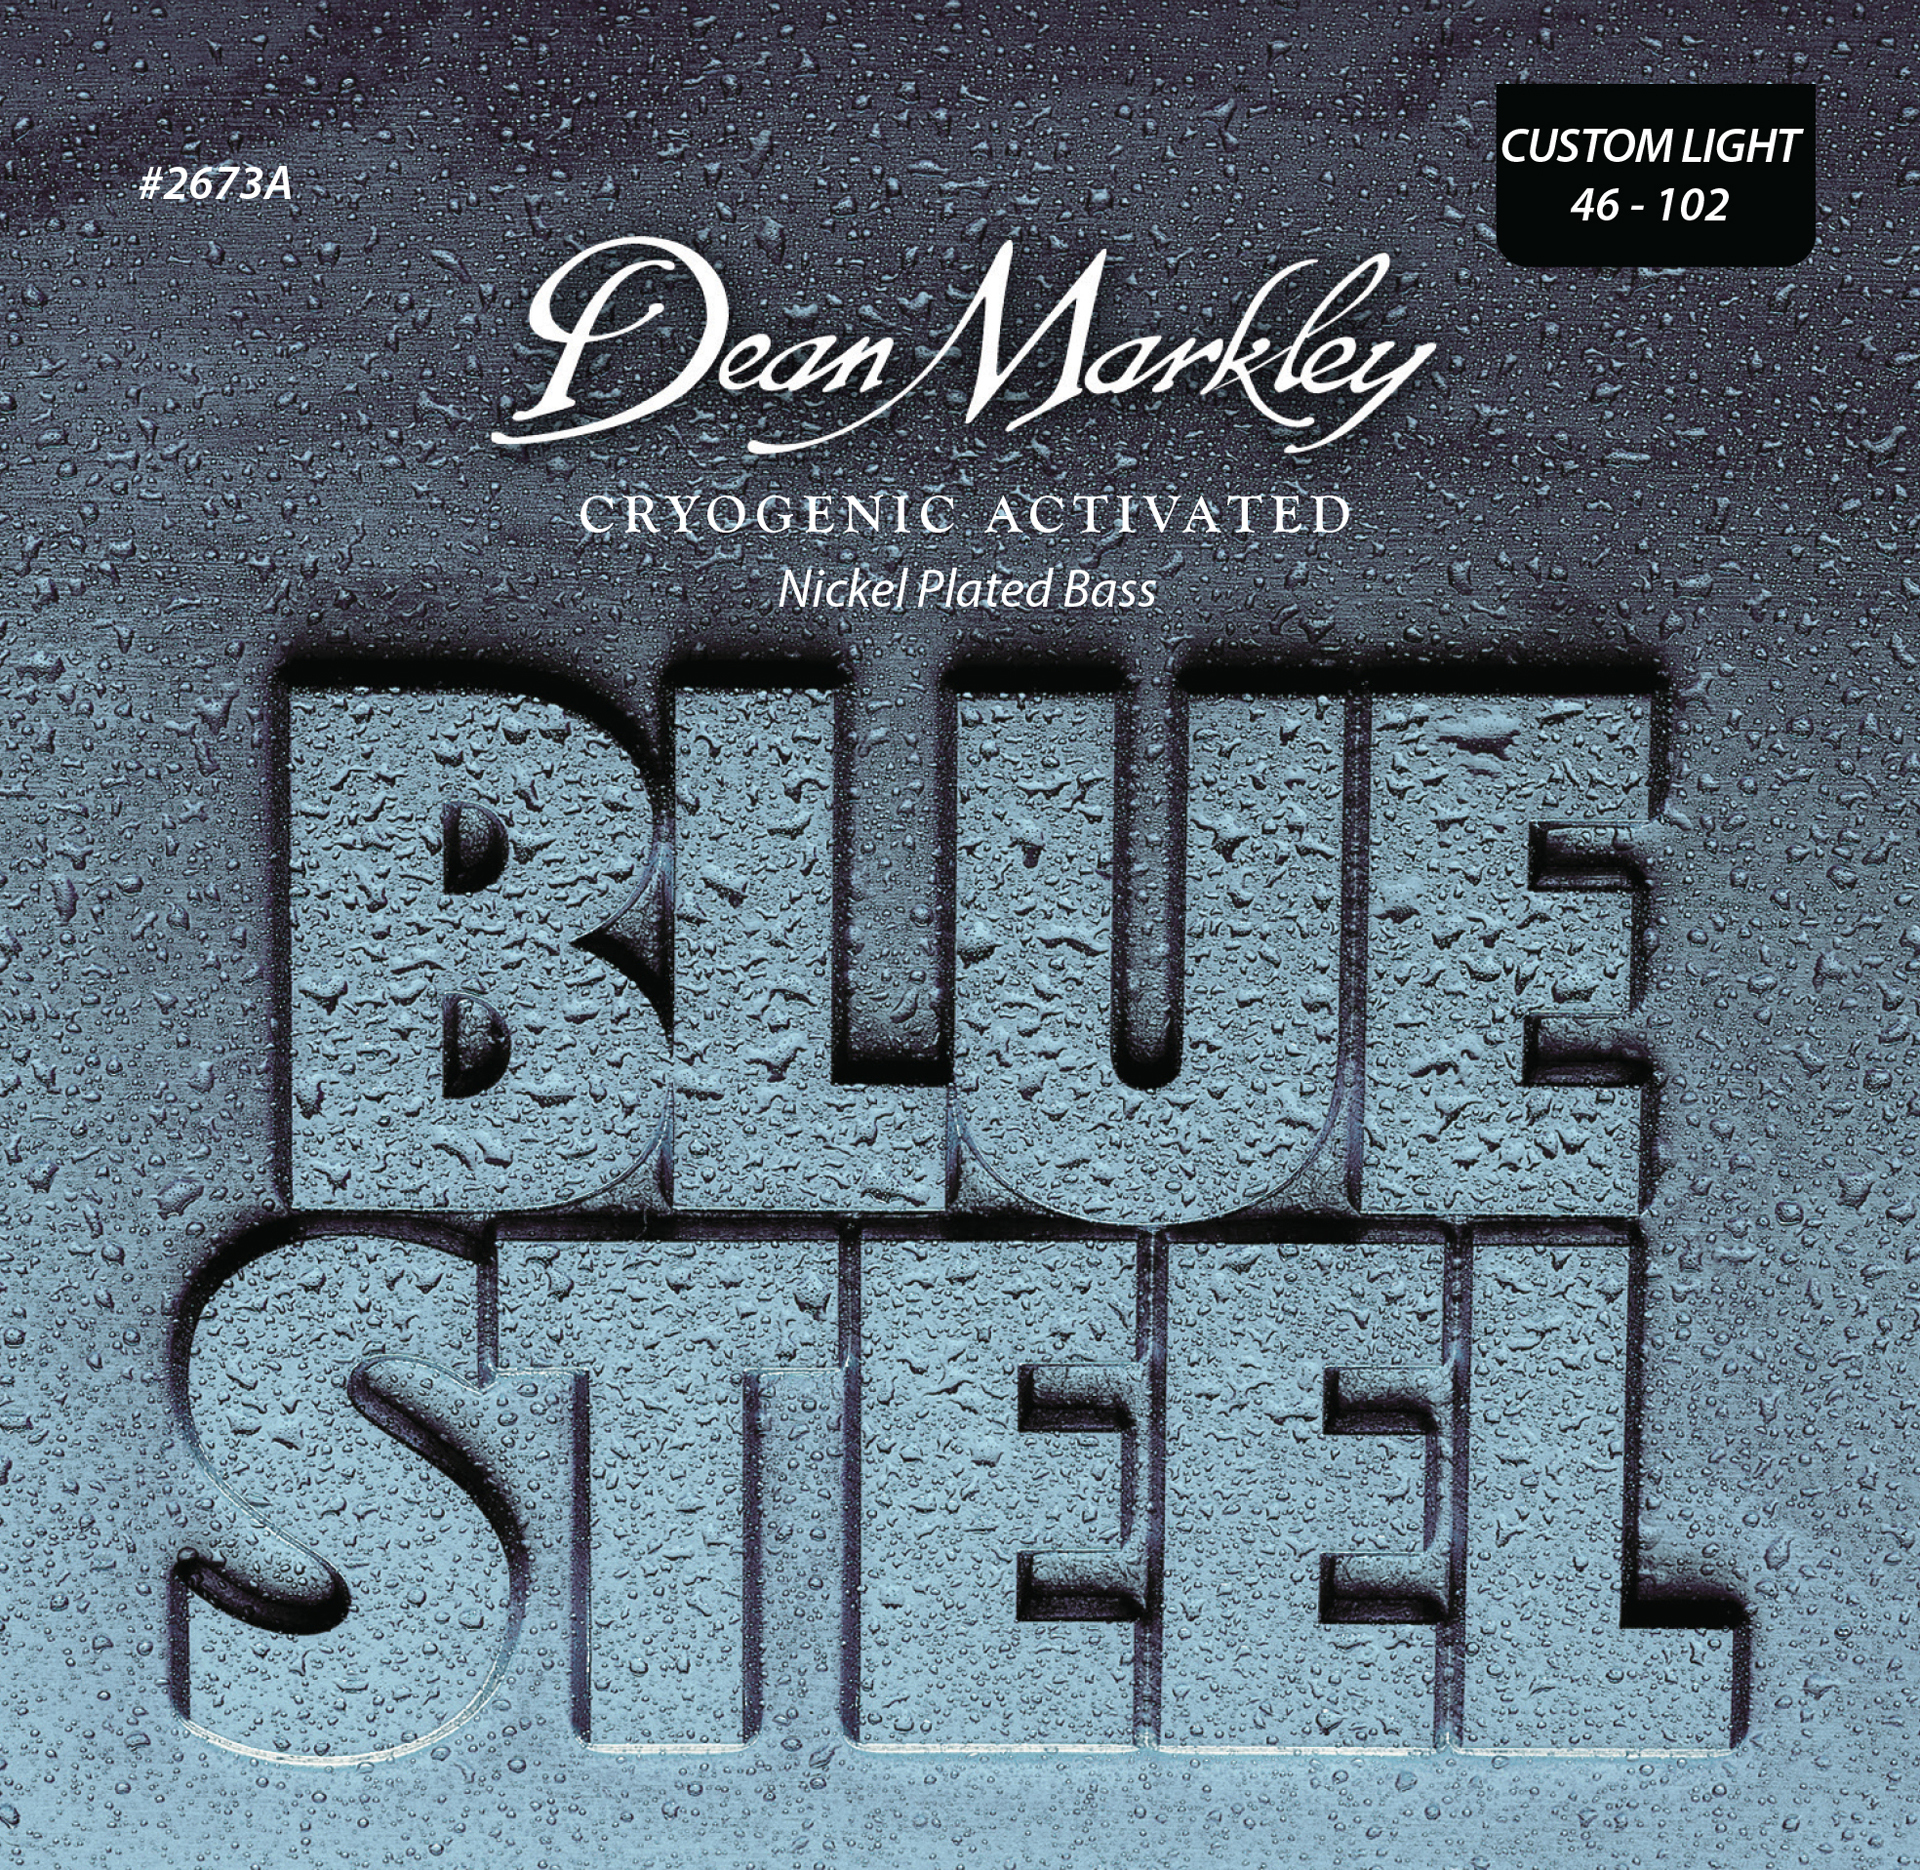 Dean Markley Blue Steel - 2673 A - Electric Bass String Set, Nickel Plated Steel, 4-String, Custom Light, .046-.102